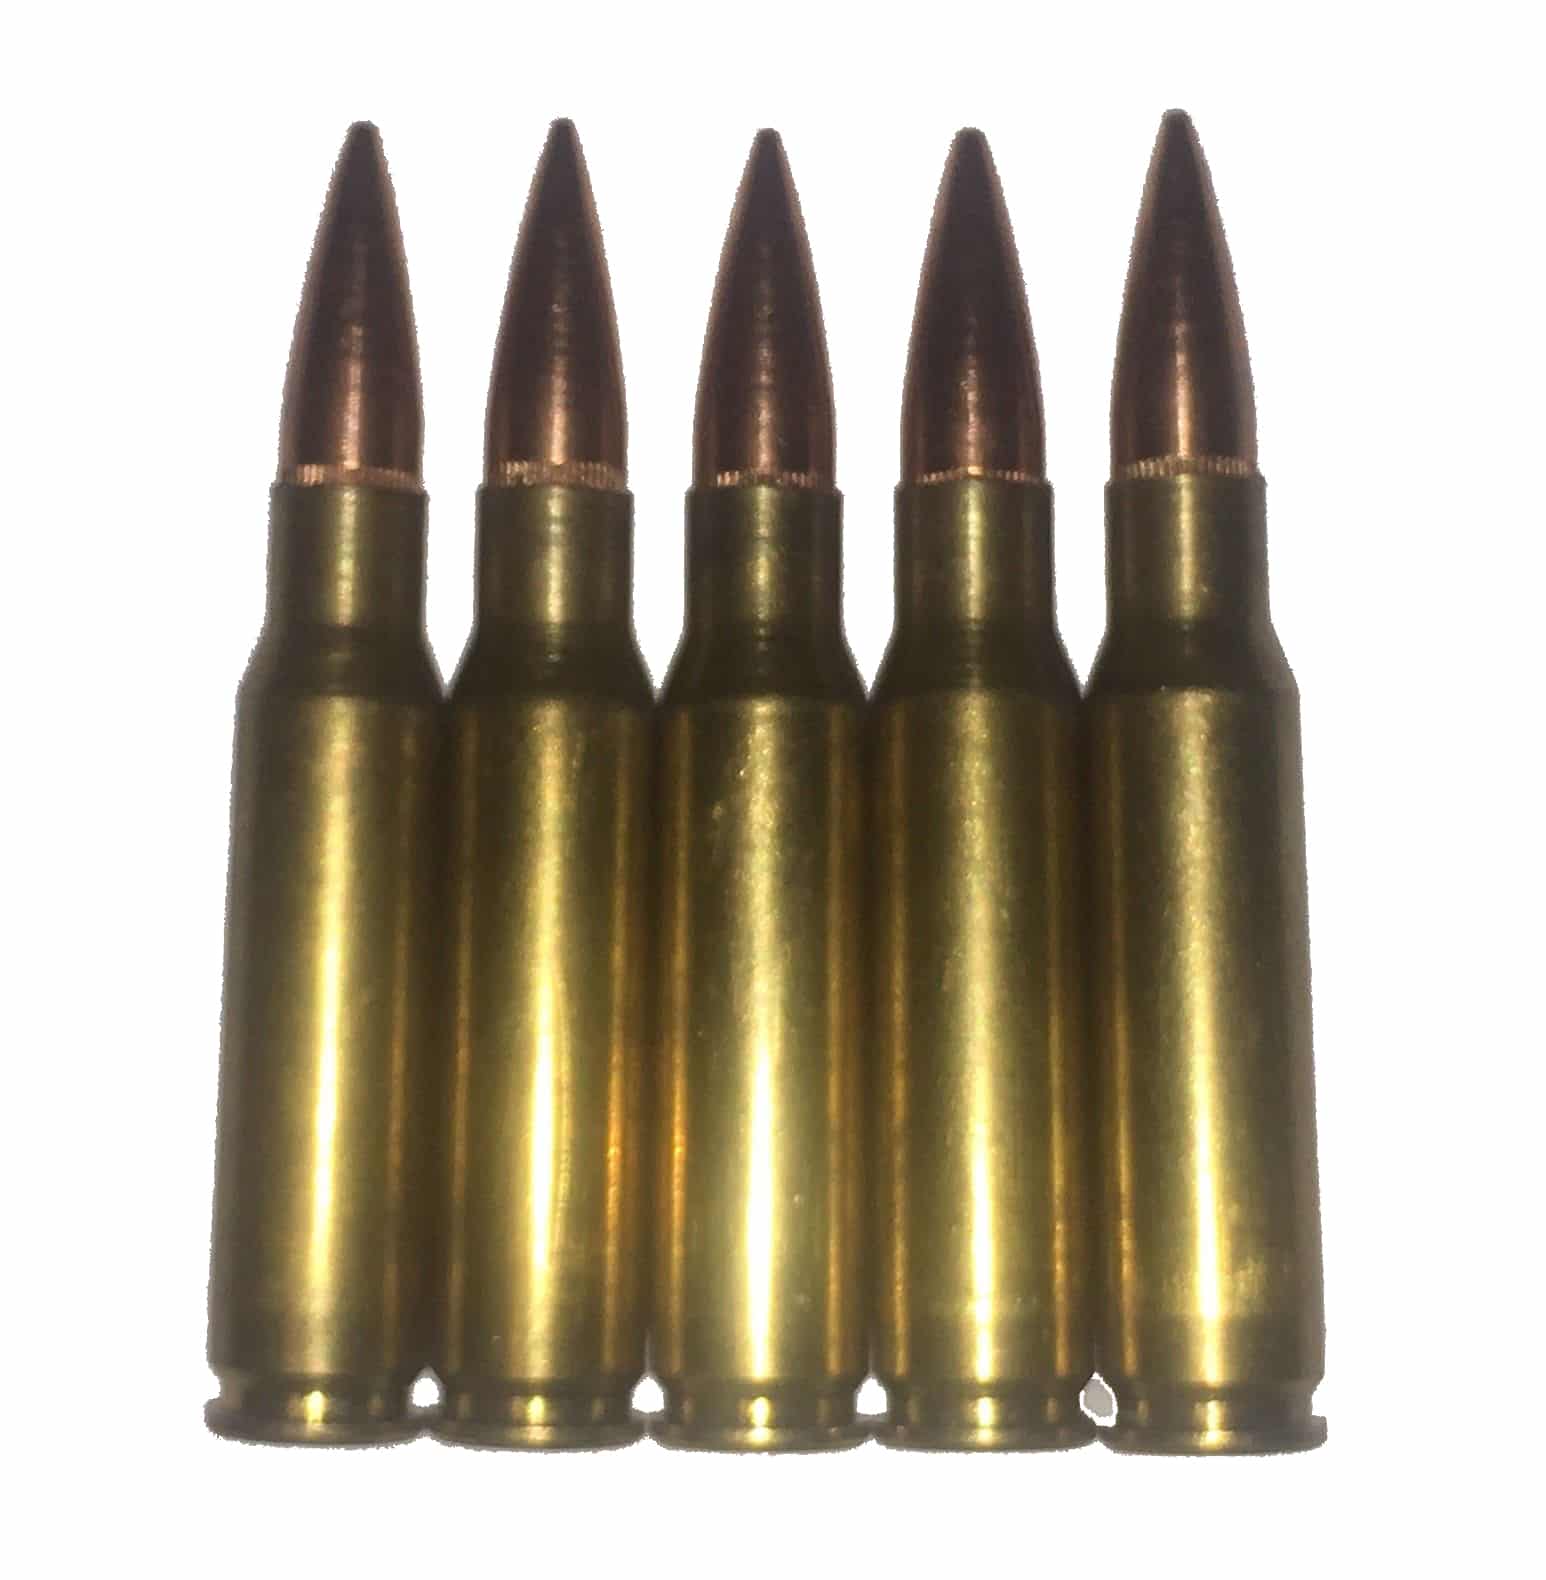 25 - DUMMY 7.62×39 Ammunition - Fake Prop Plastic Ammo Cartridge Model